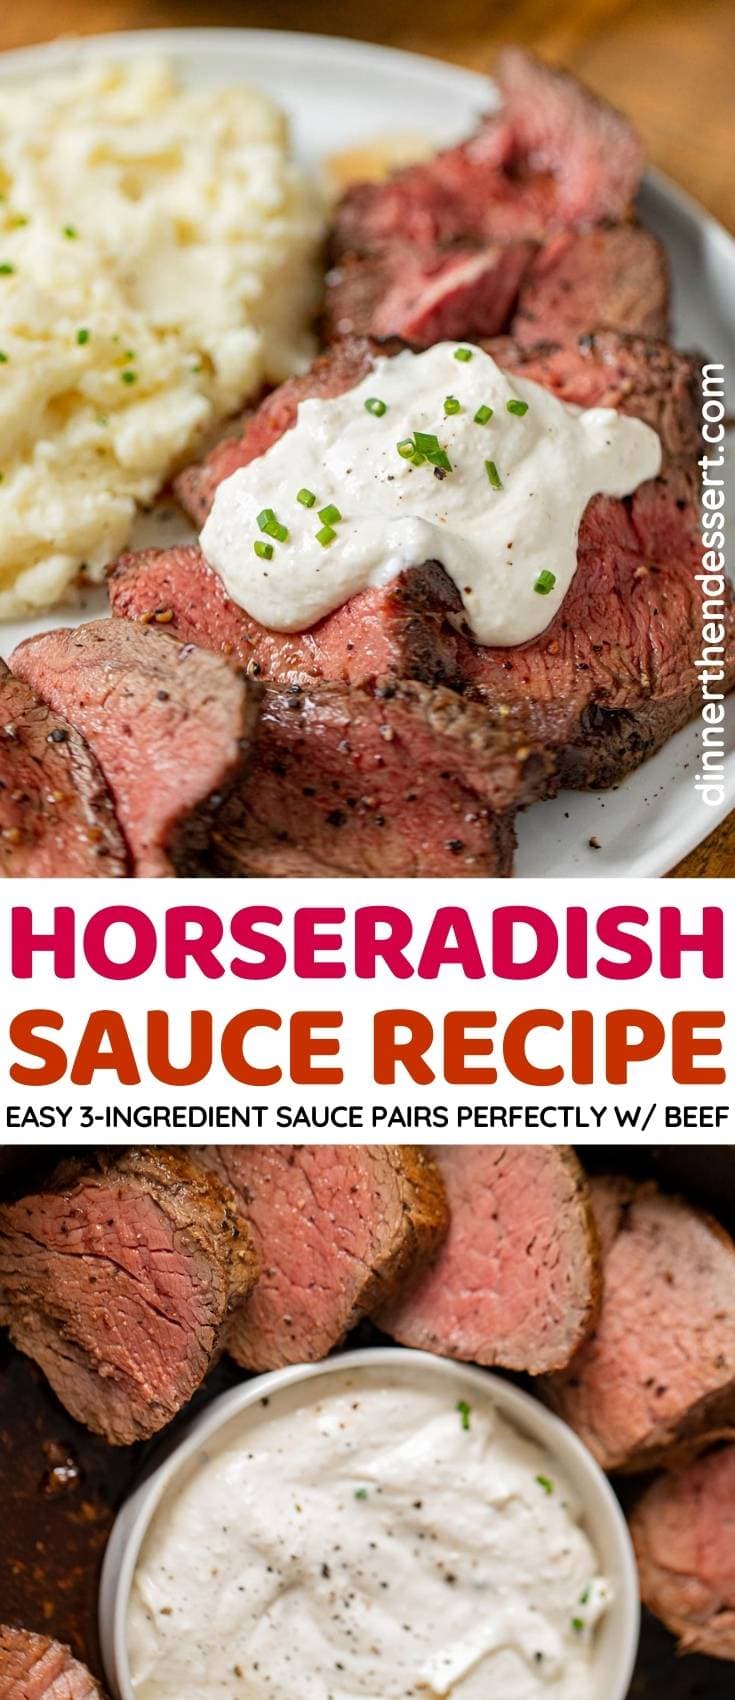 Horseradish Sauce collage